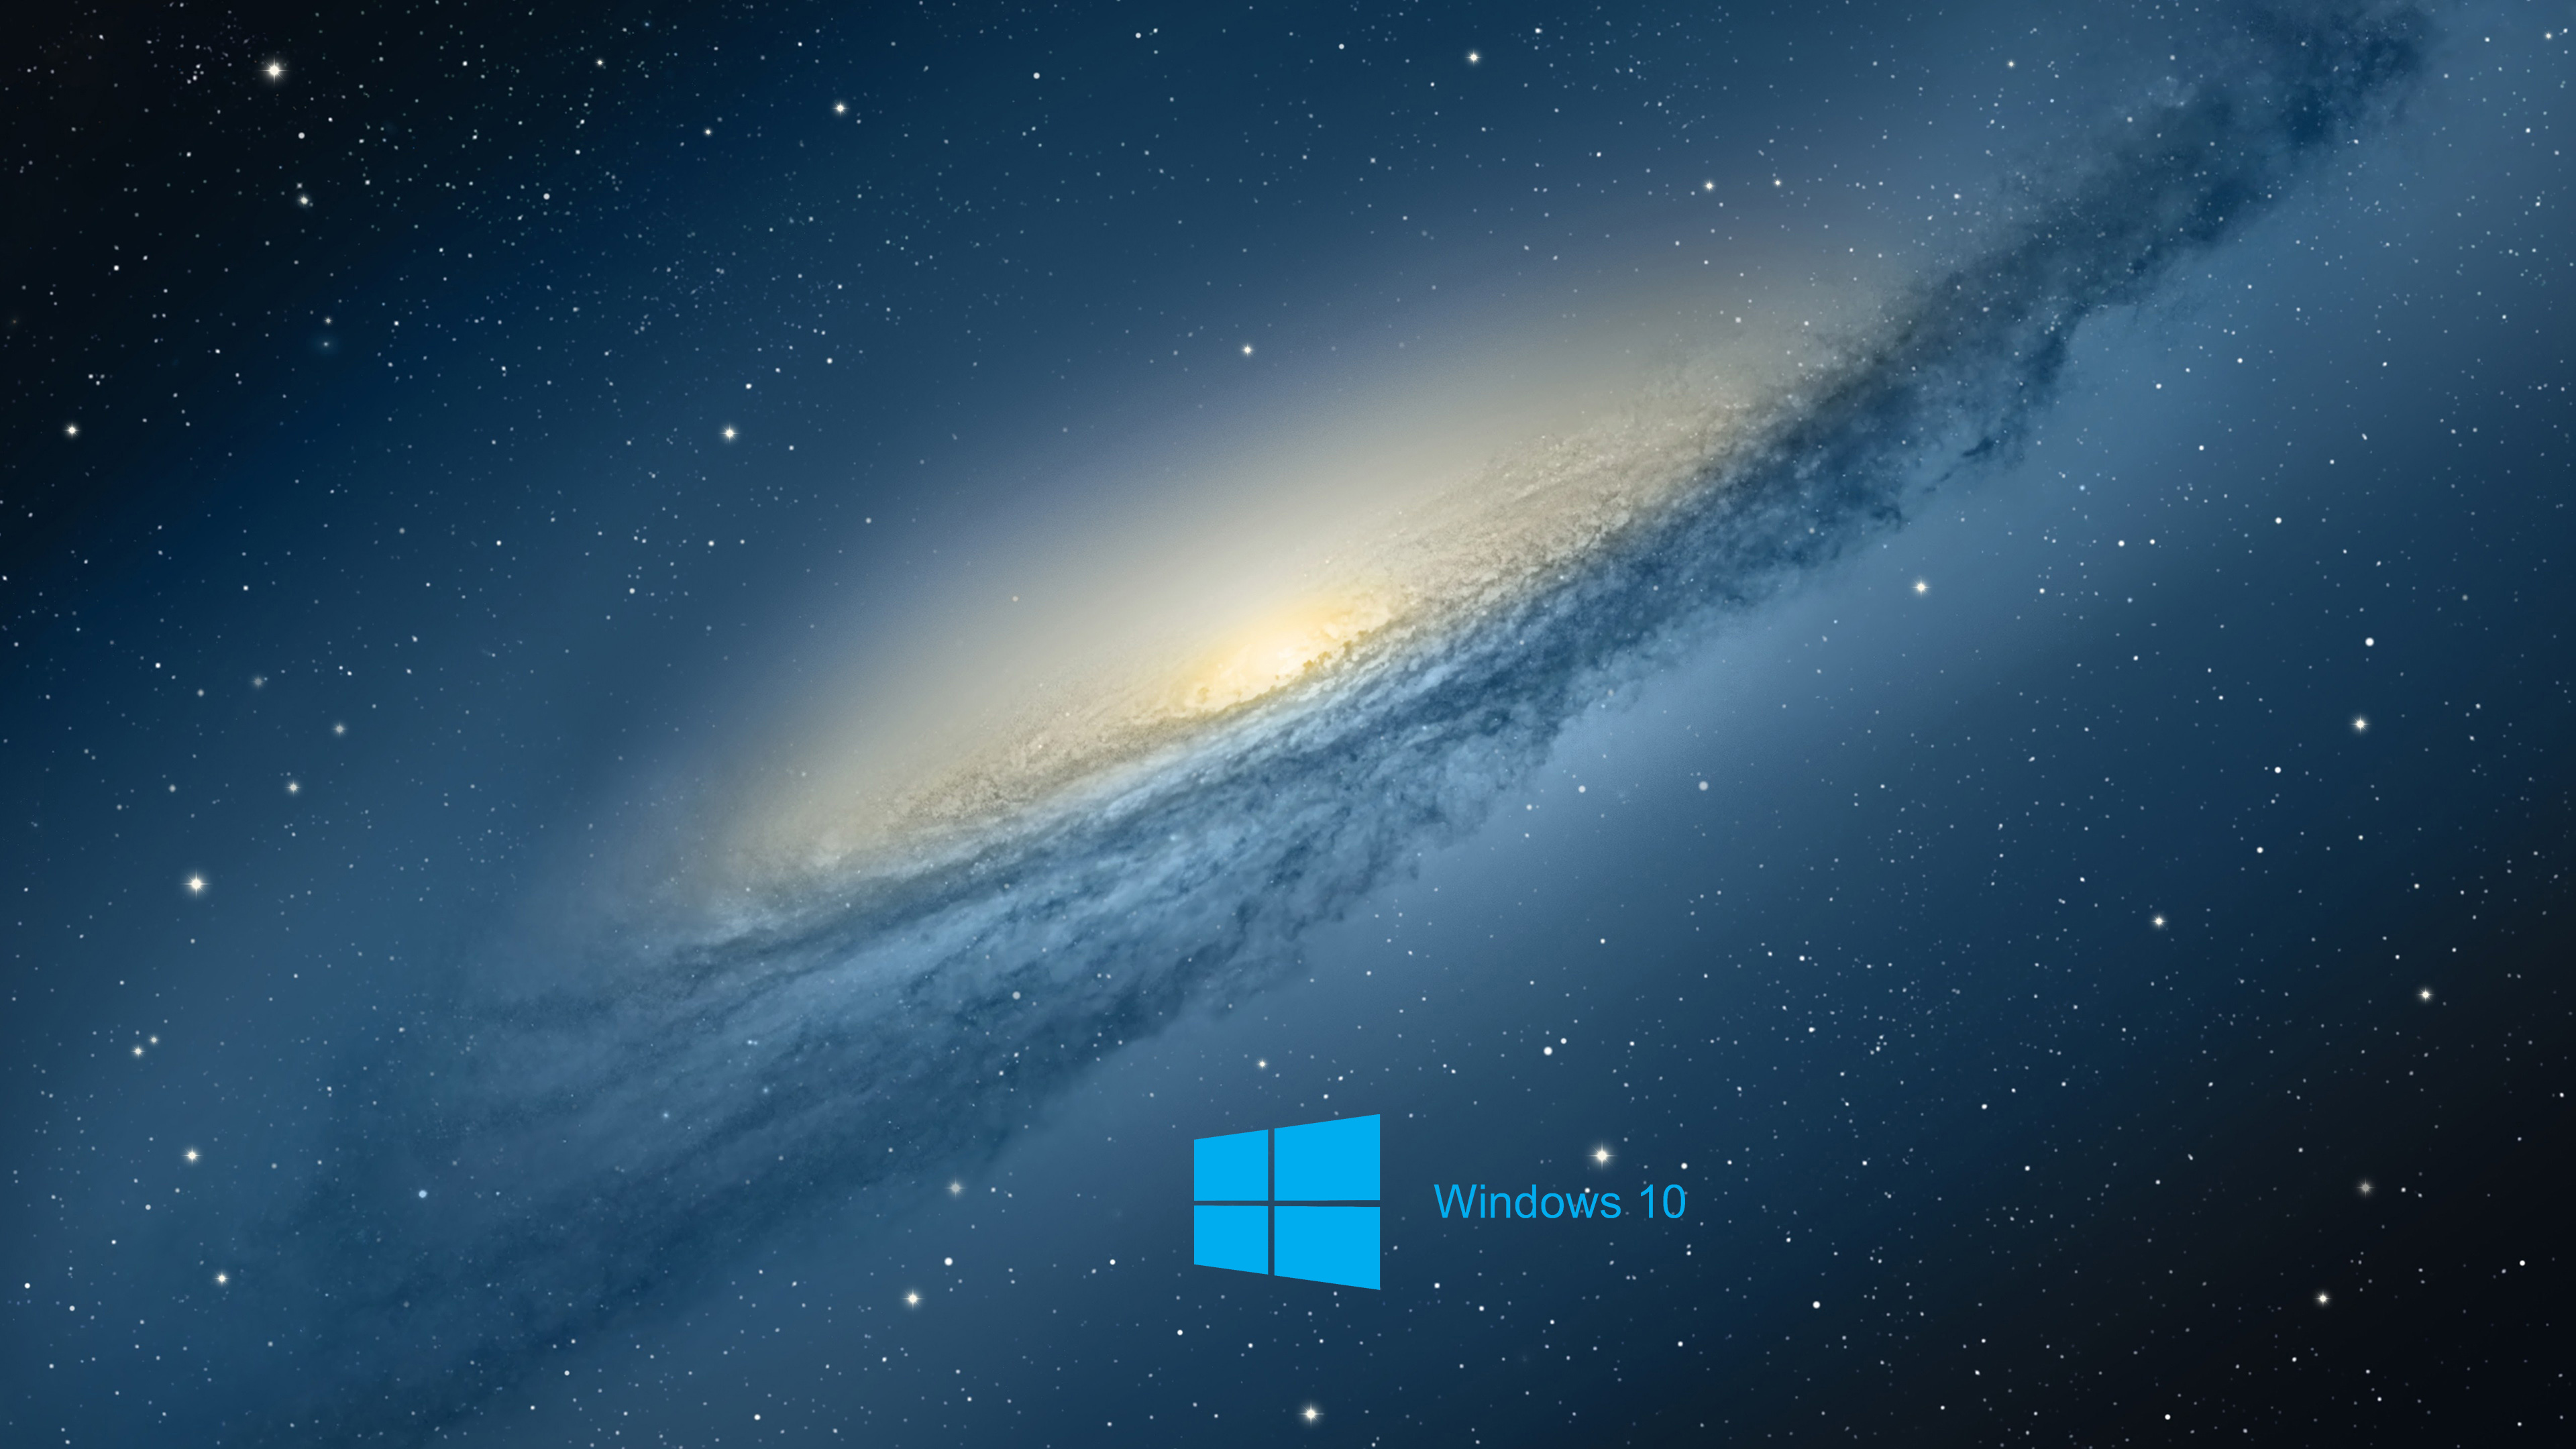 47 Windows 10 Full Hd Wallpaper Wallpapersafari